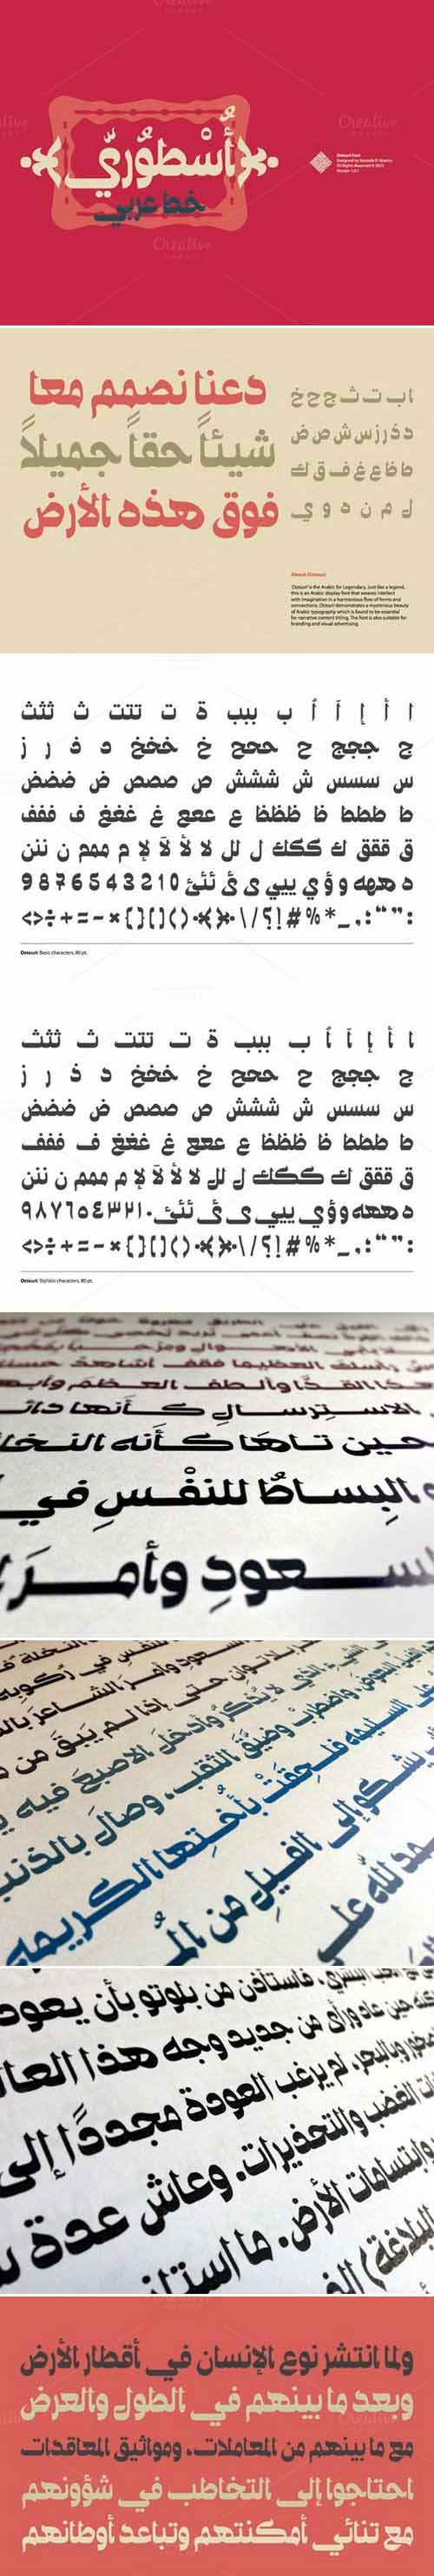 CM - Arabic Font 'Ostouri' 3